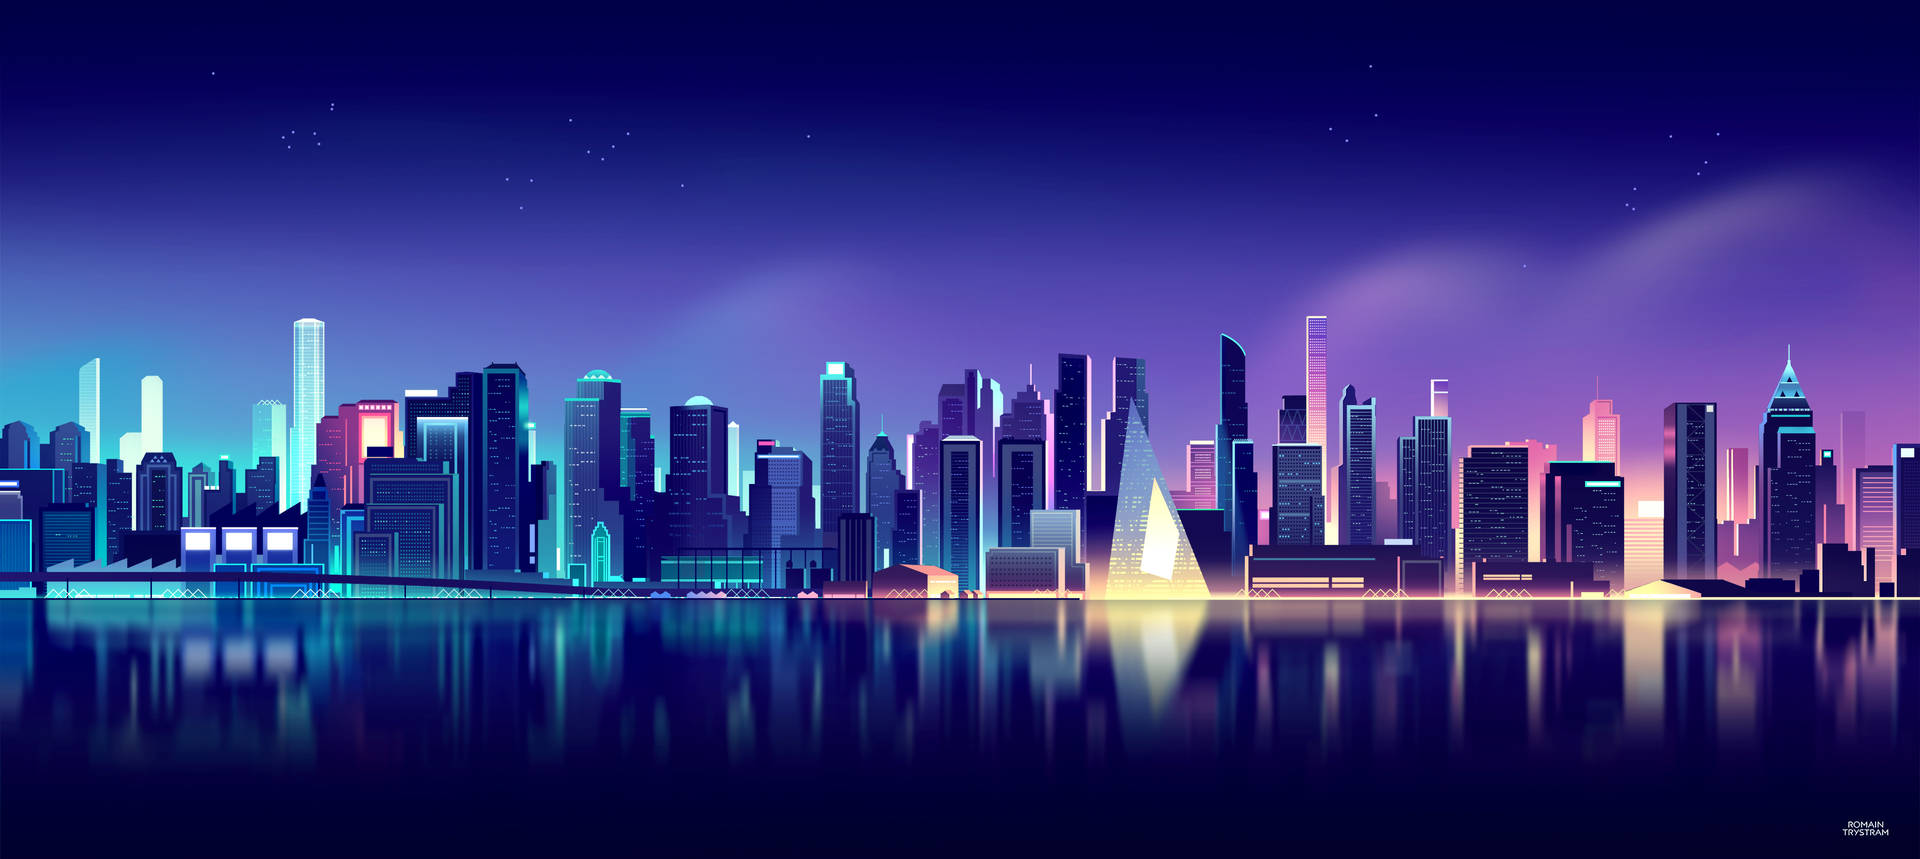 Neon Purple Aesthetic Distant City Background